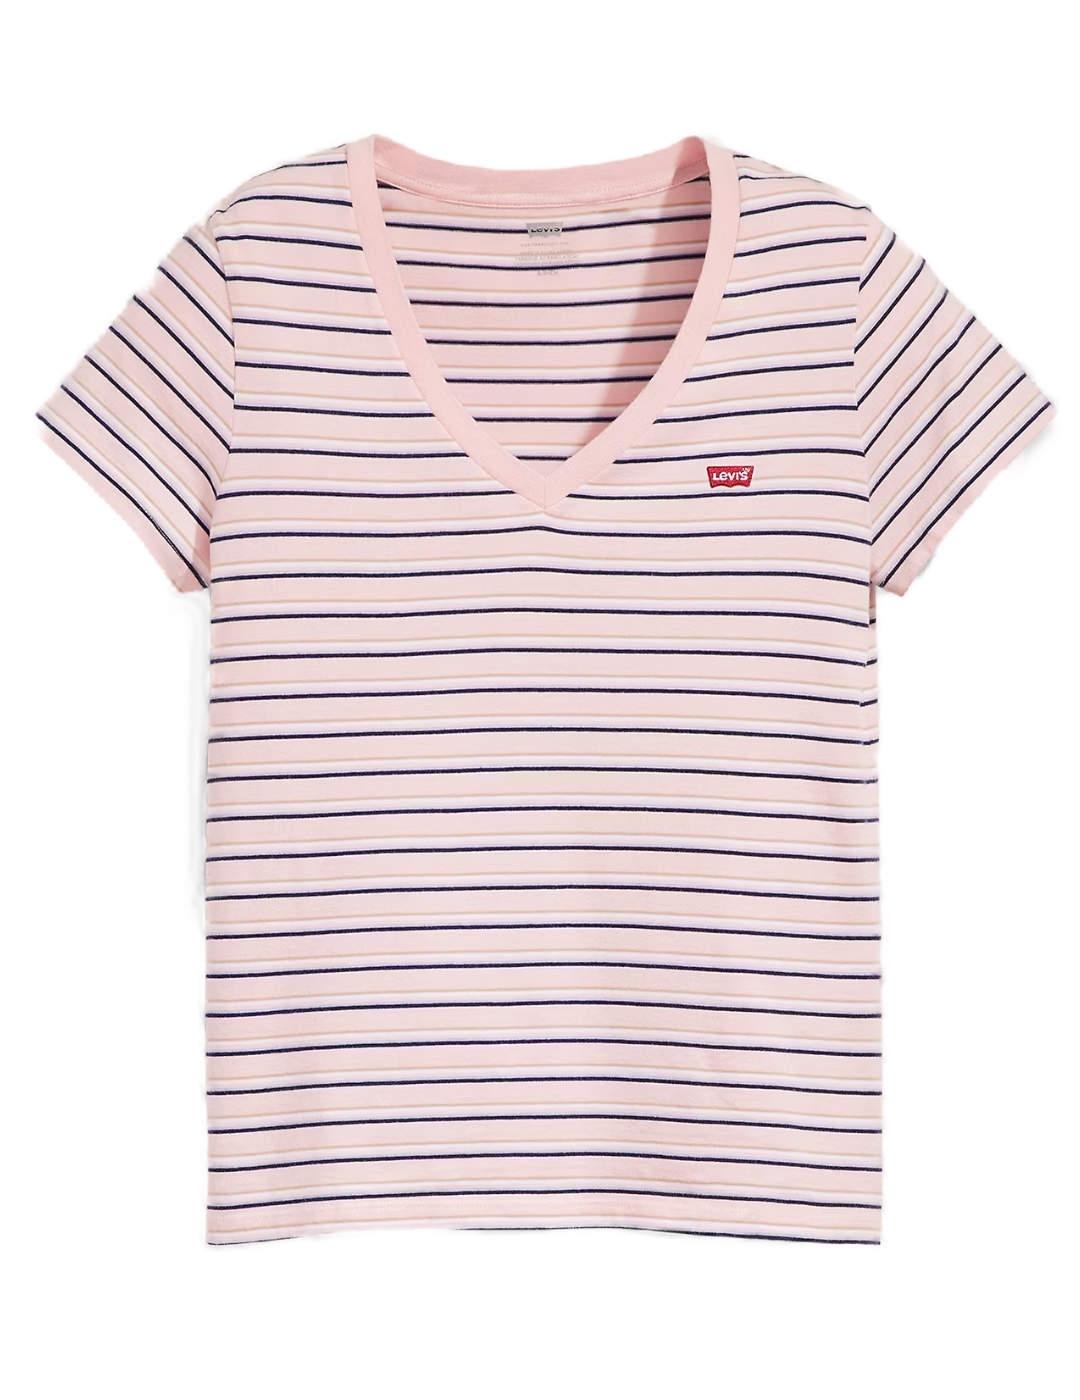 Camiseta Levi's Cool Stripe en rosa rayas para mujer